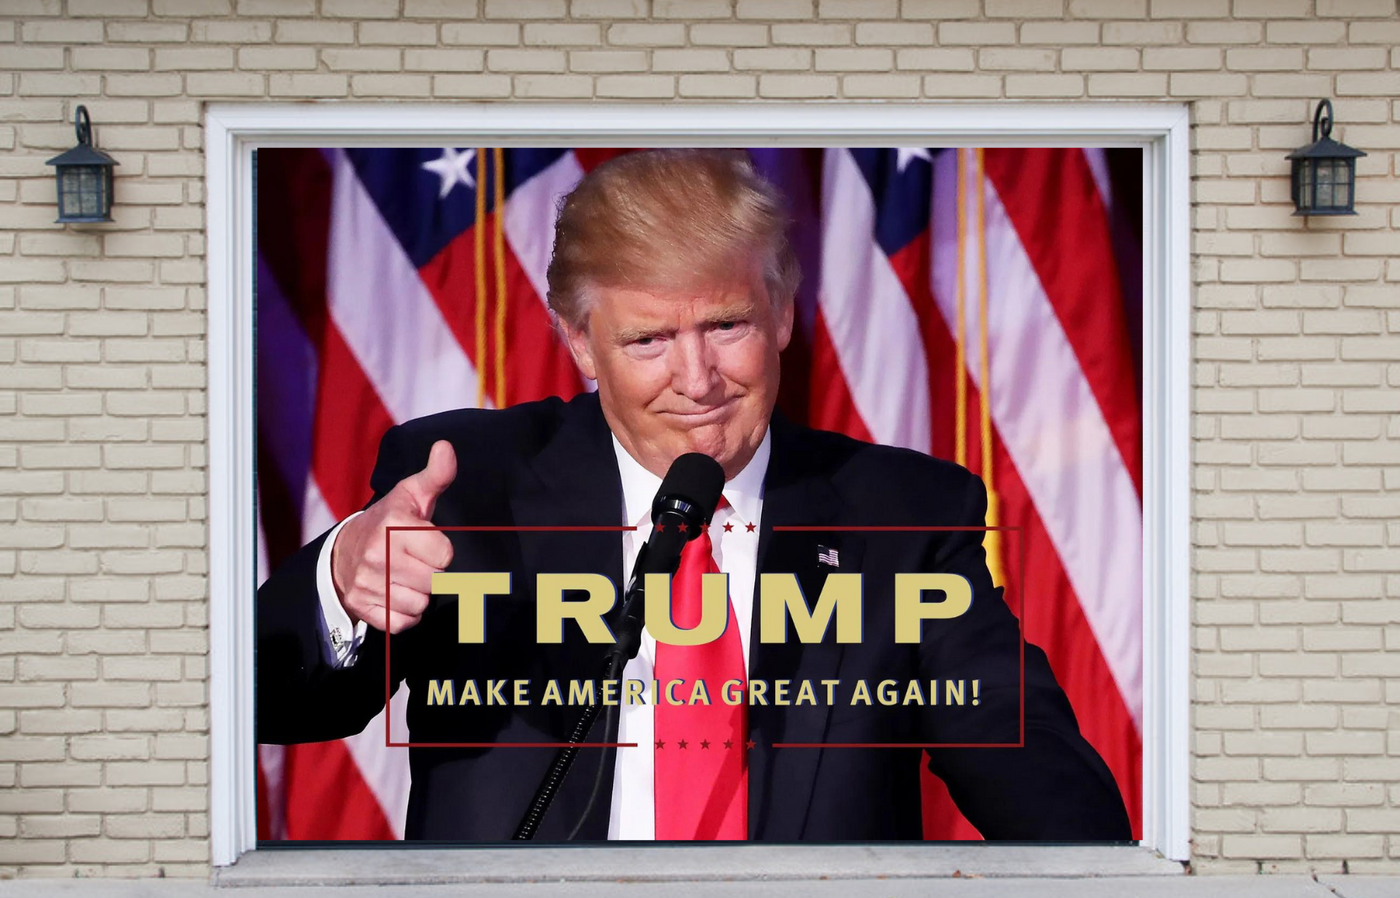 Trump Make America Great Again Garage Door Cover Wrap Banner Decoration